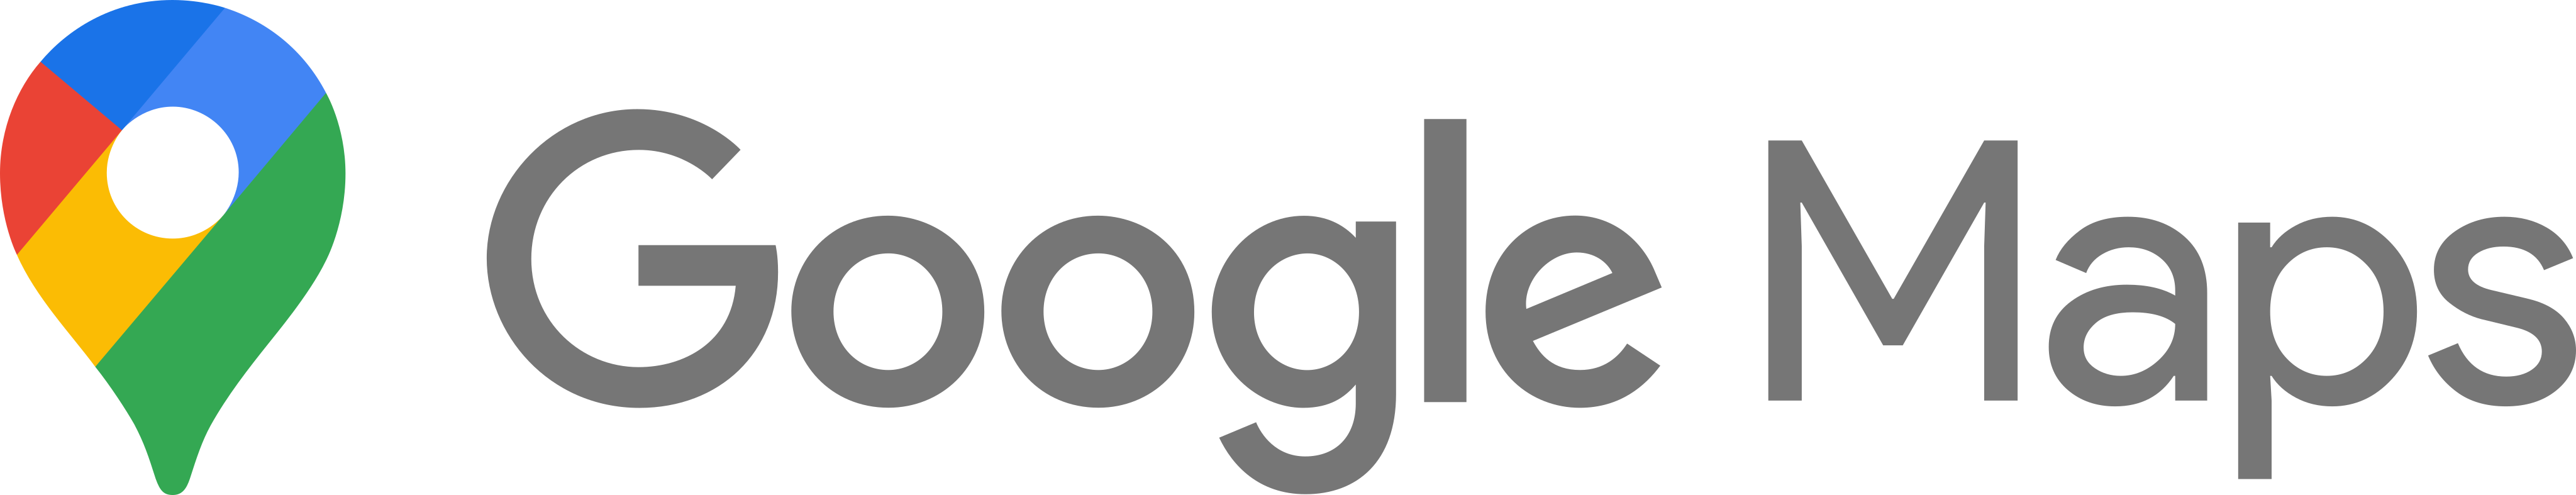 Google Maps Logo - PNG and Vector - Logo Download